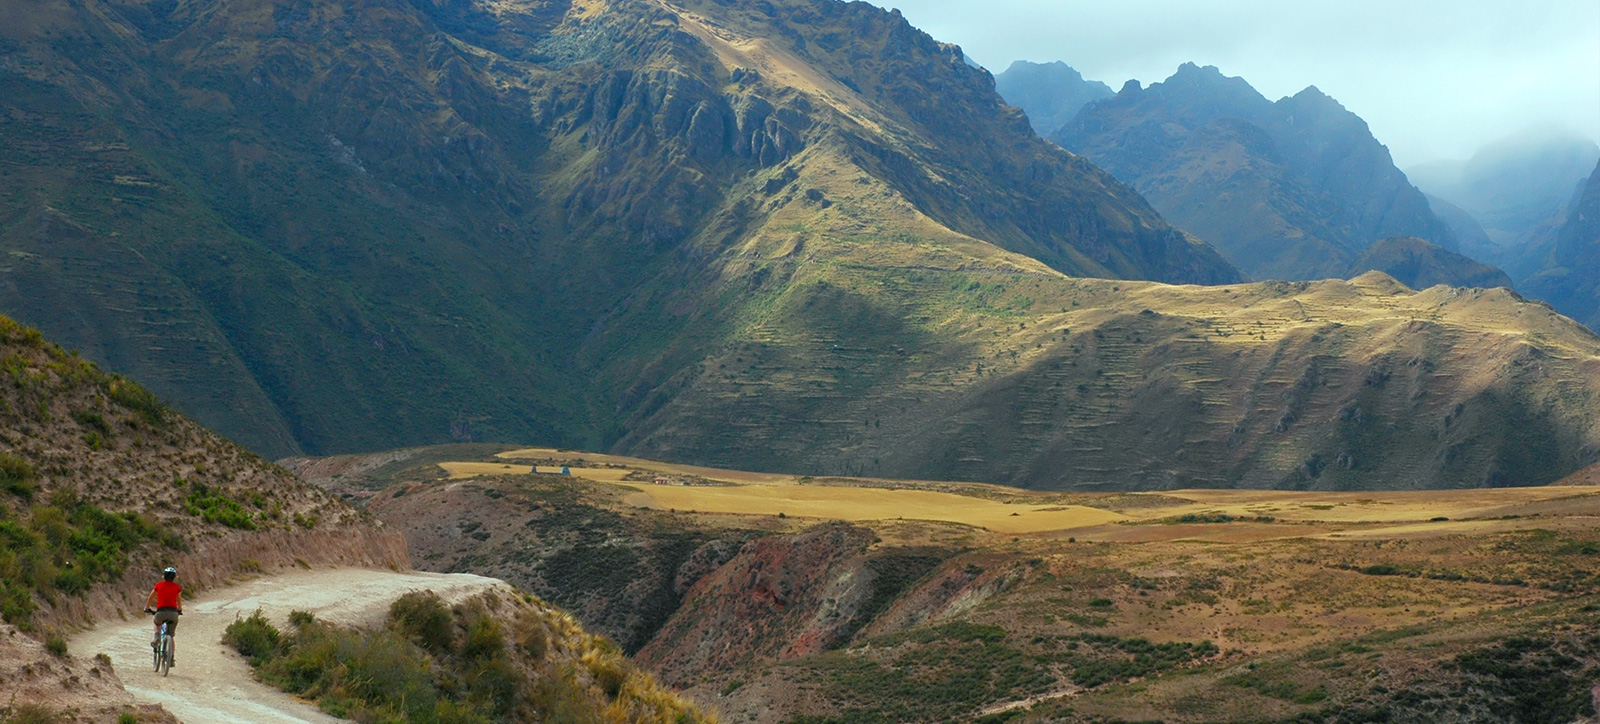 The mountains of Peru